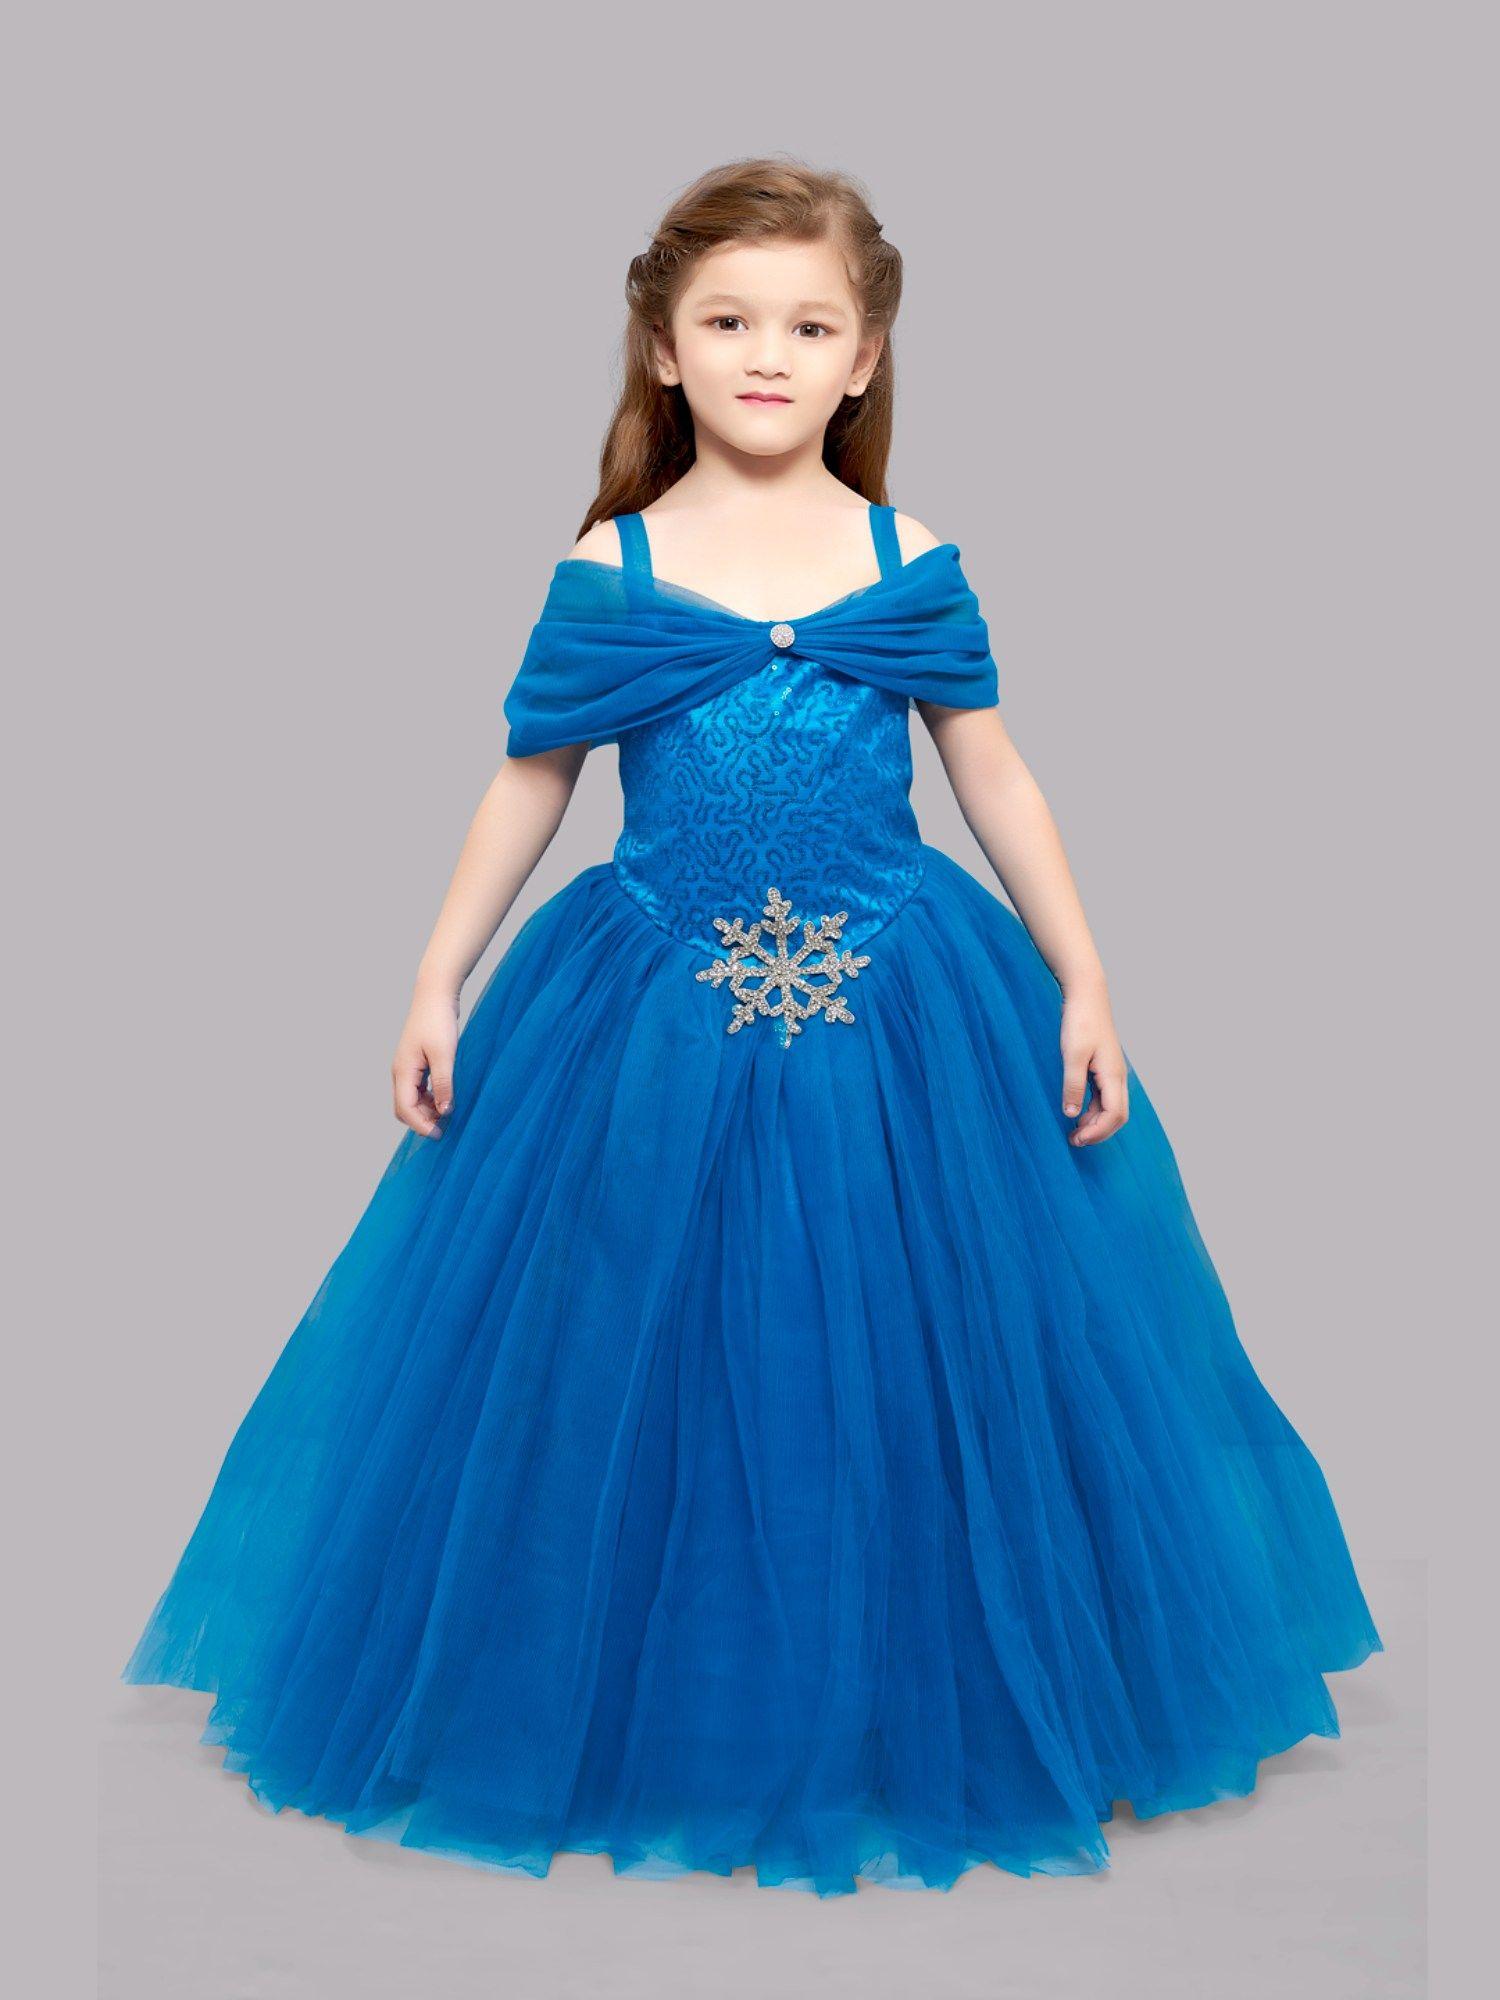 blue princess ball gown